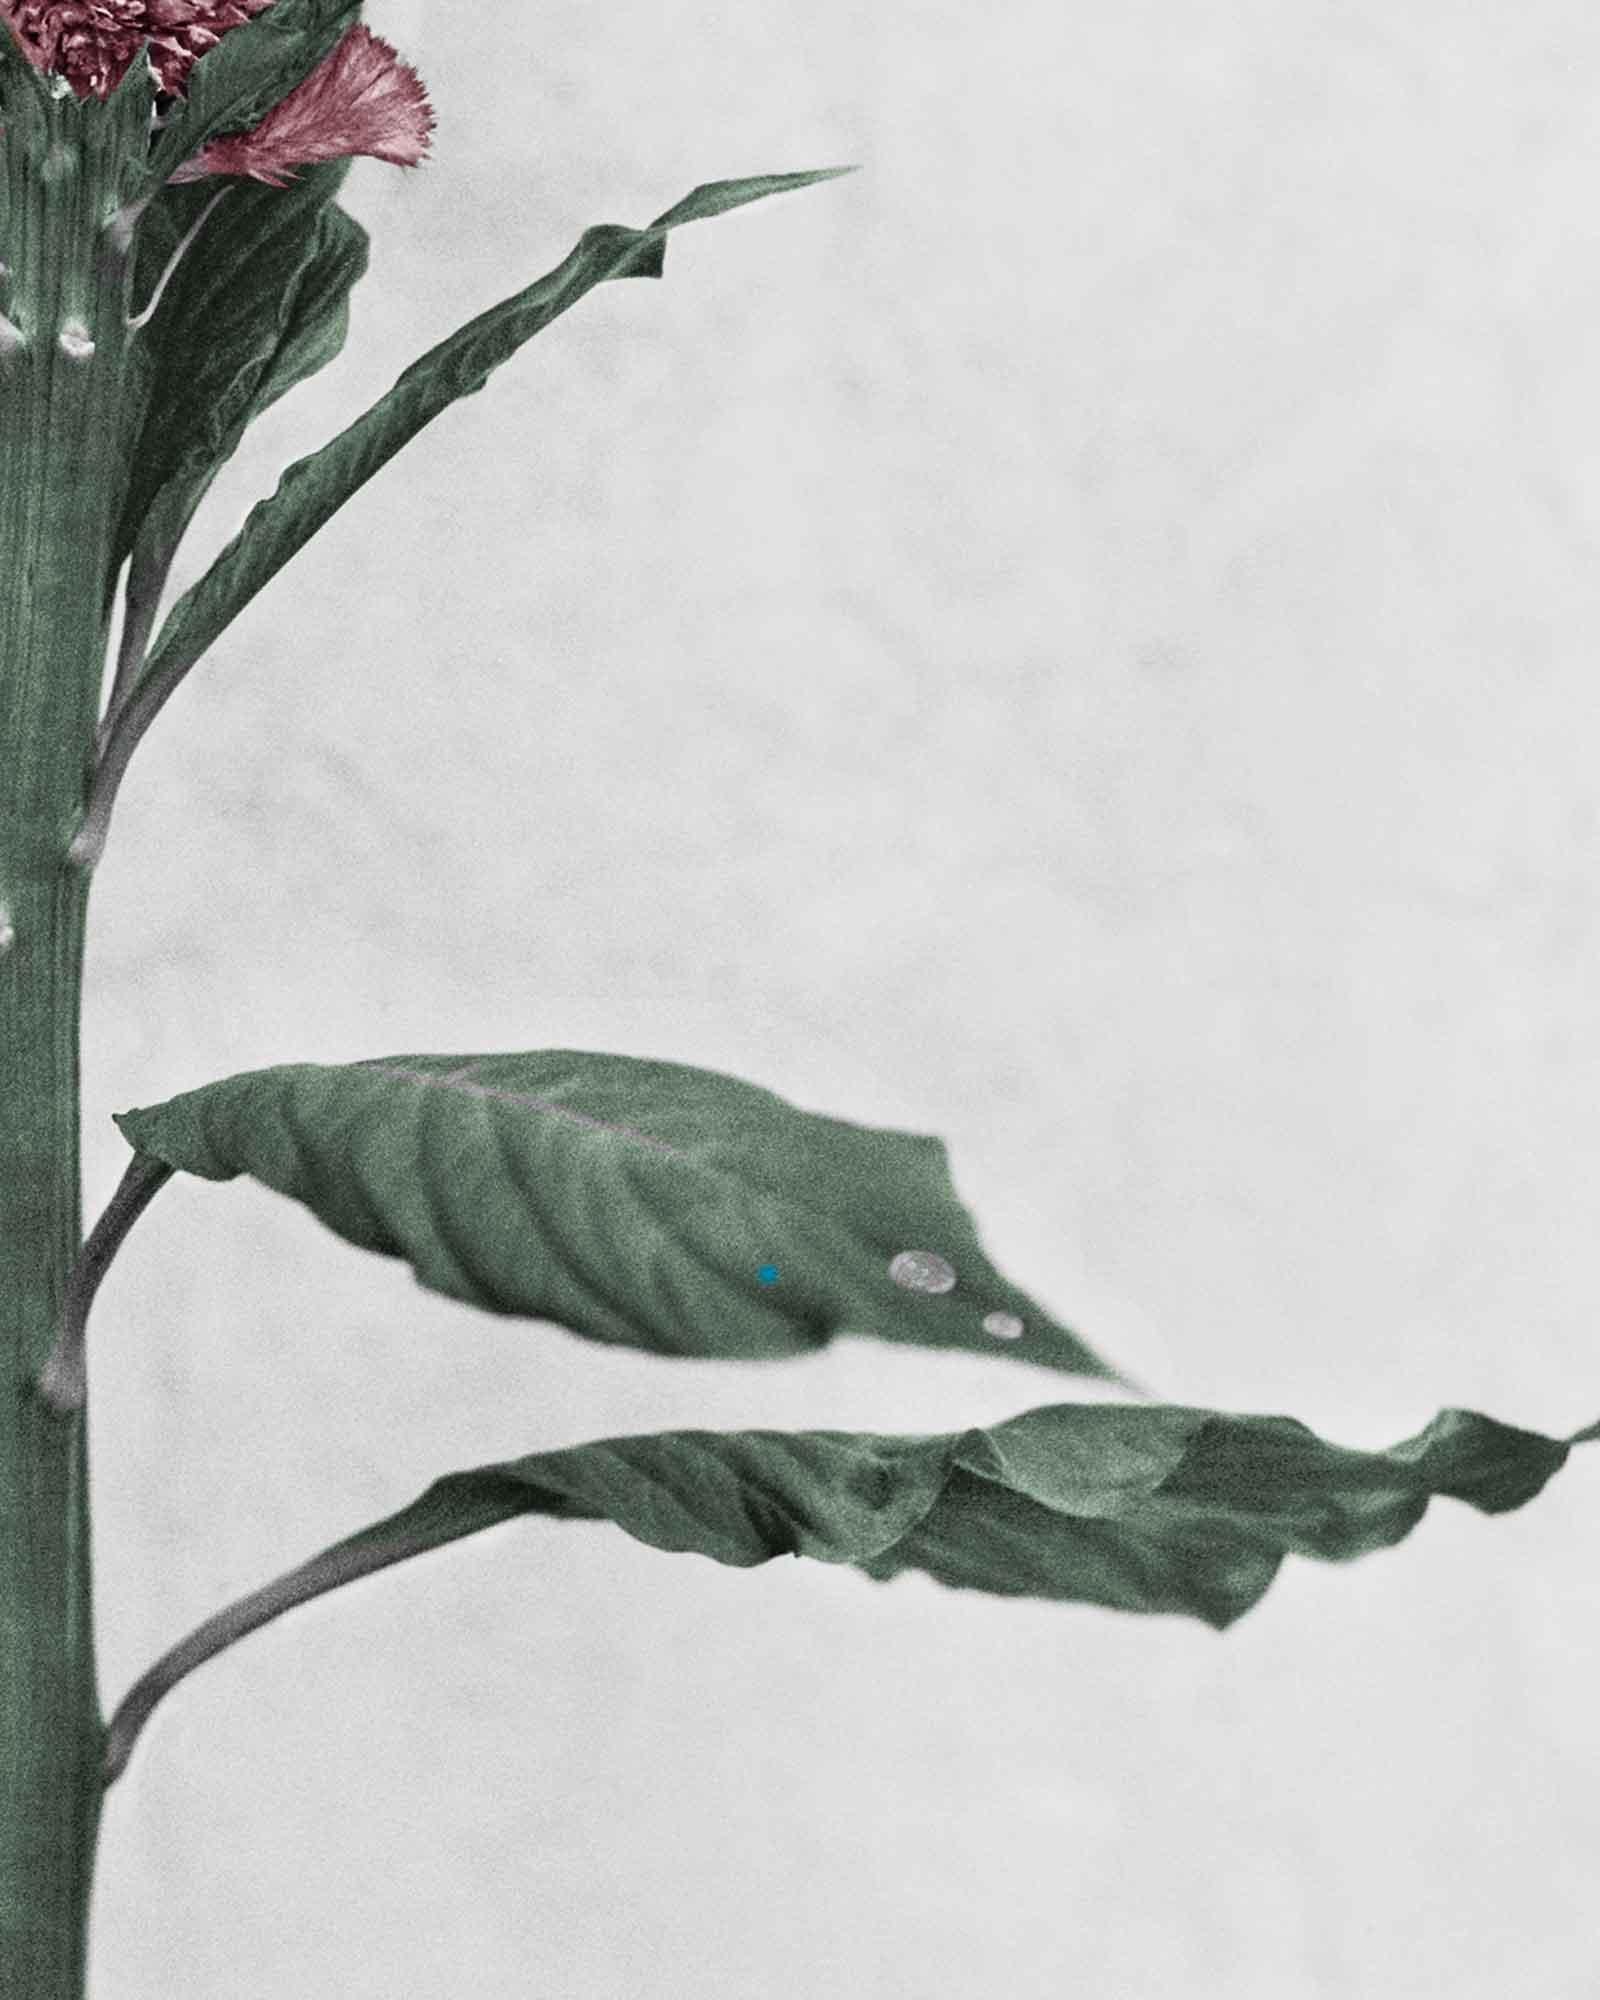 Botanica #3 (Celosia Cristata) - Contemporary Photograph by Vee Speers